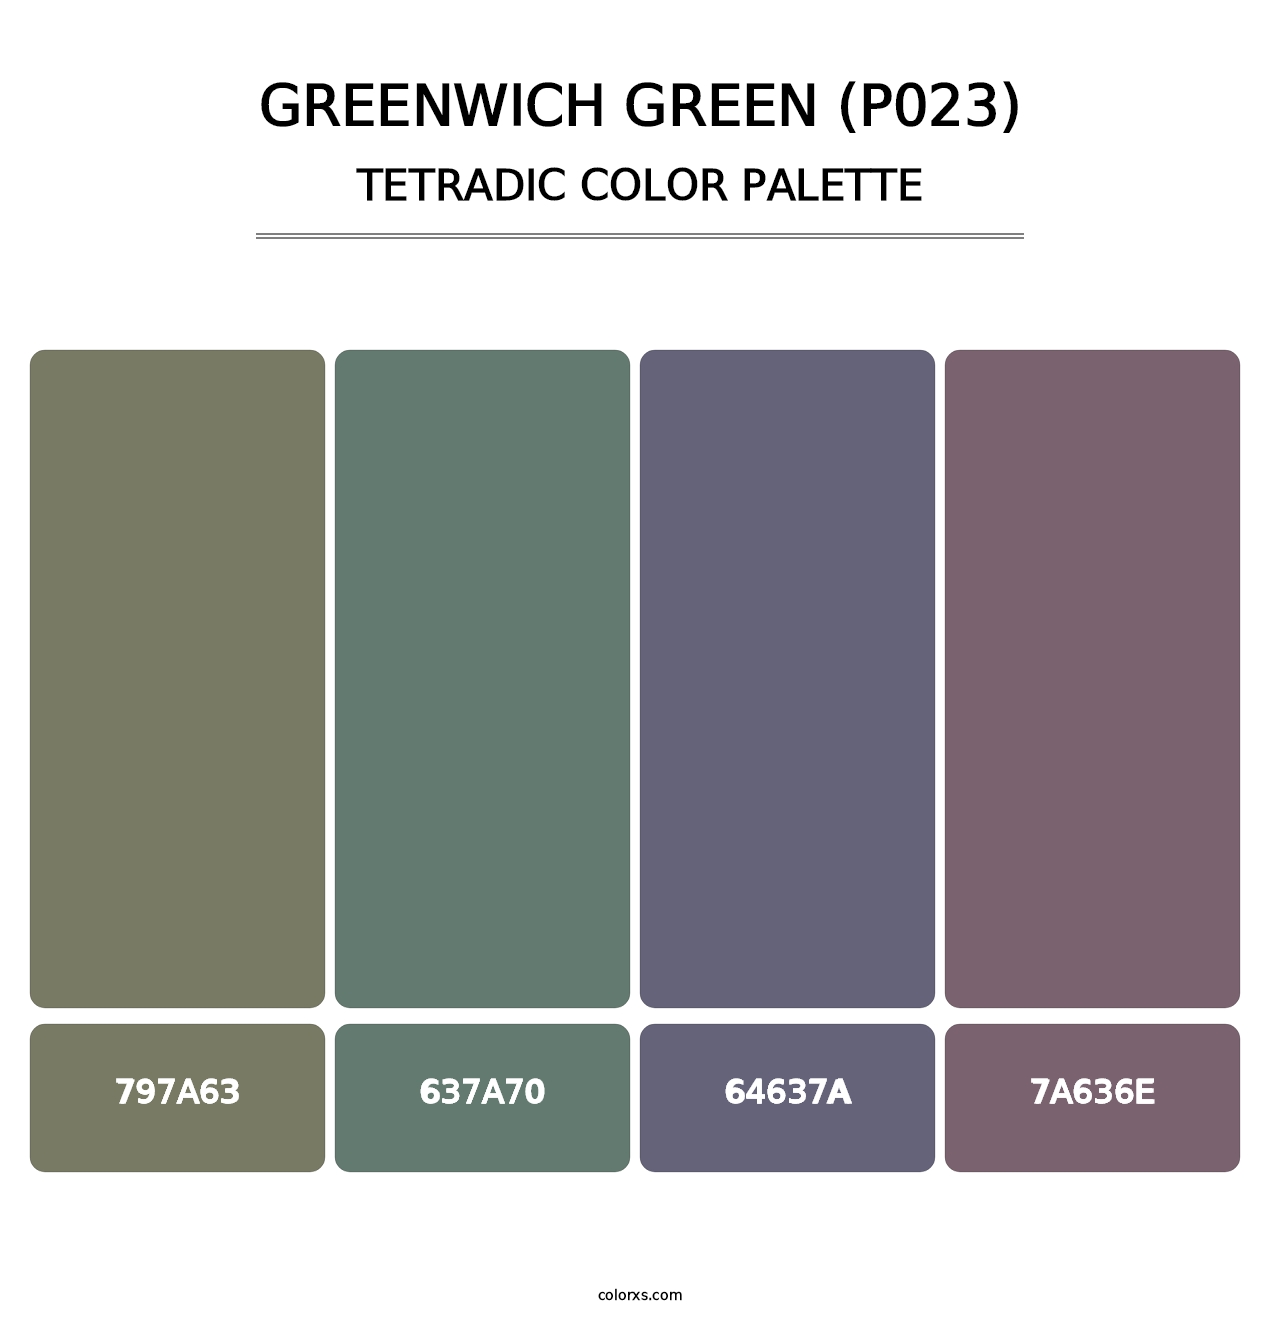 Greenwich Green (P023) - Tetradic Color Palette